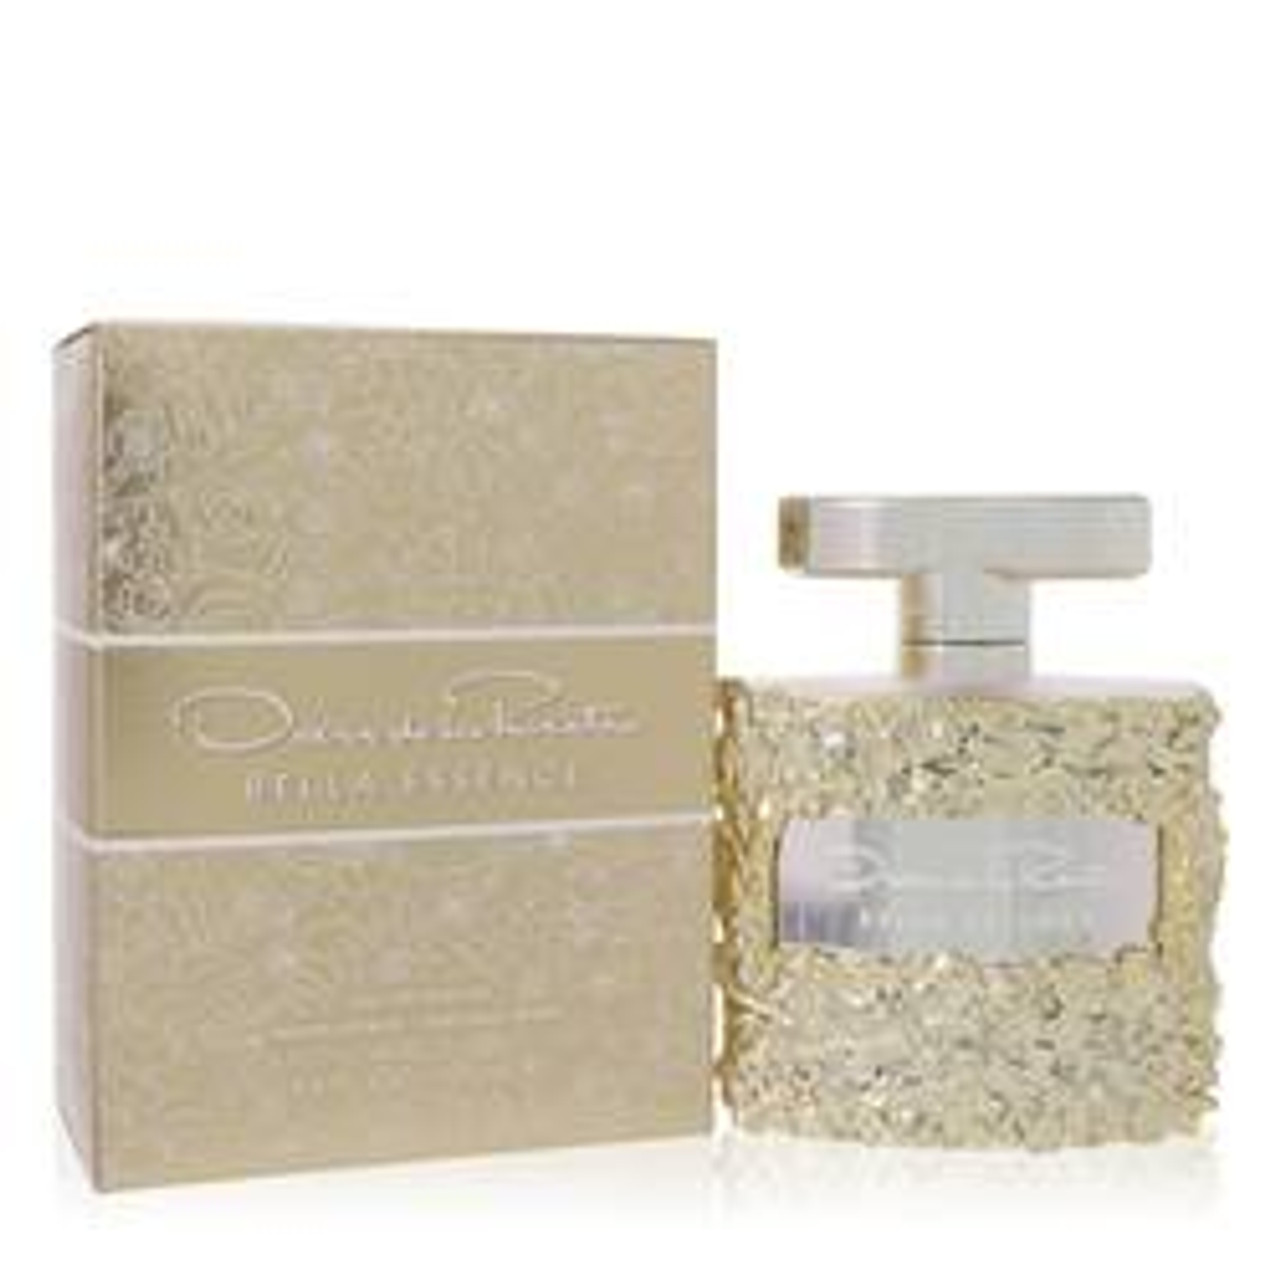 Bella Essence Perfume By Oscar De La Renta Eau De Parfum Spray 3.4 oz for Women - [From 148.00 - Choose pk Qty ] - *Ships from Miami